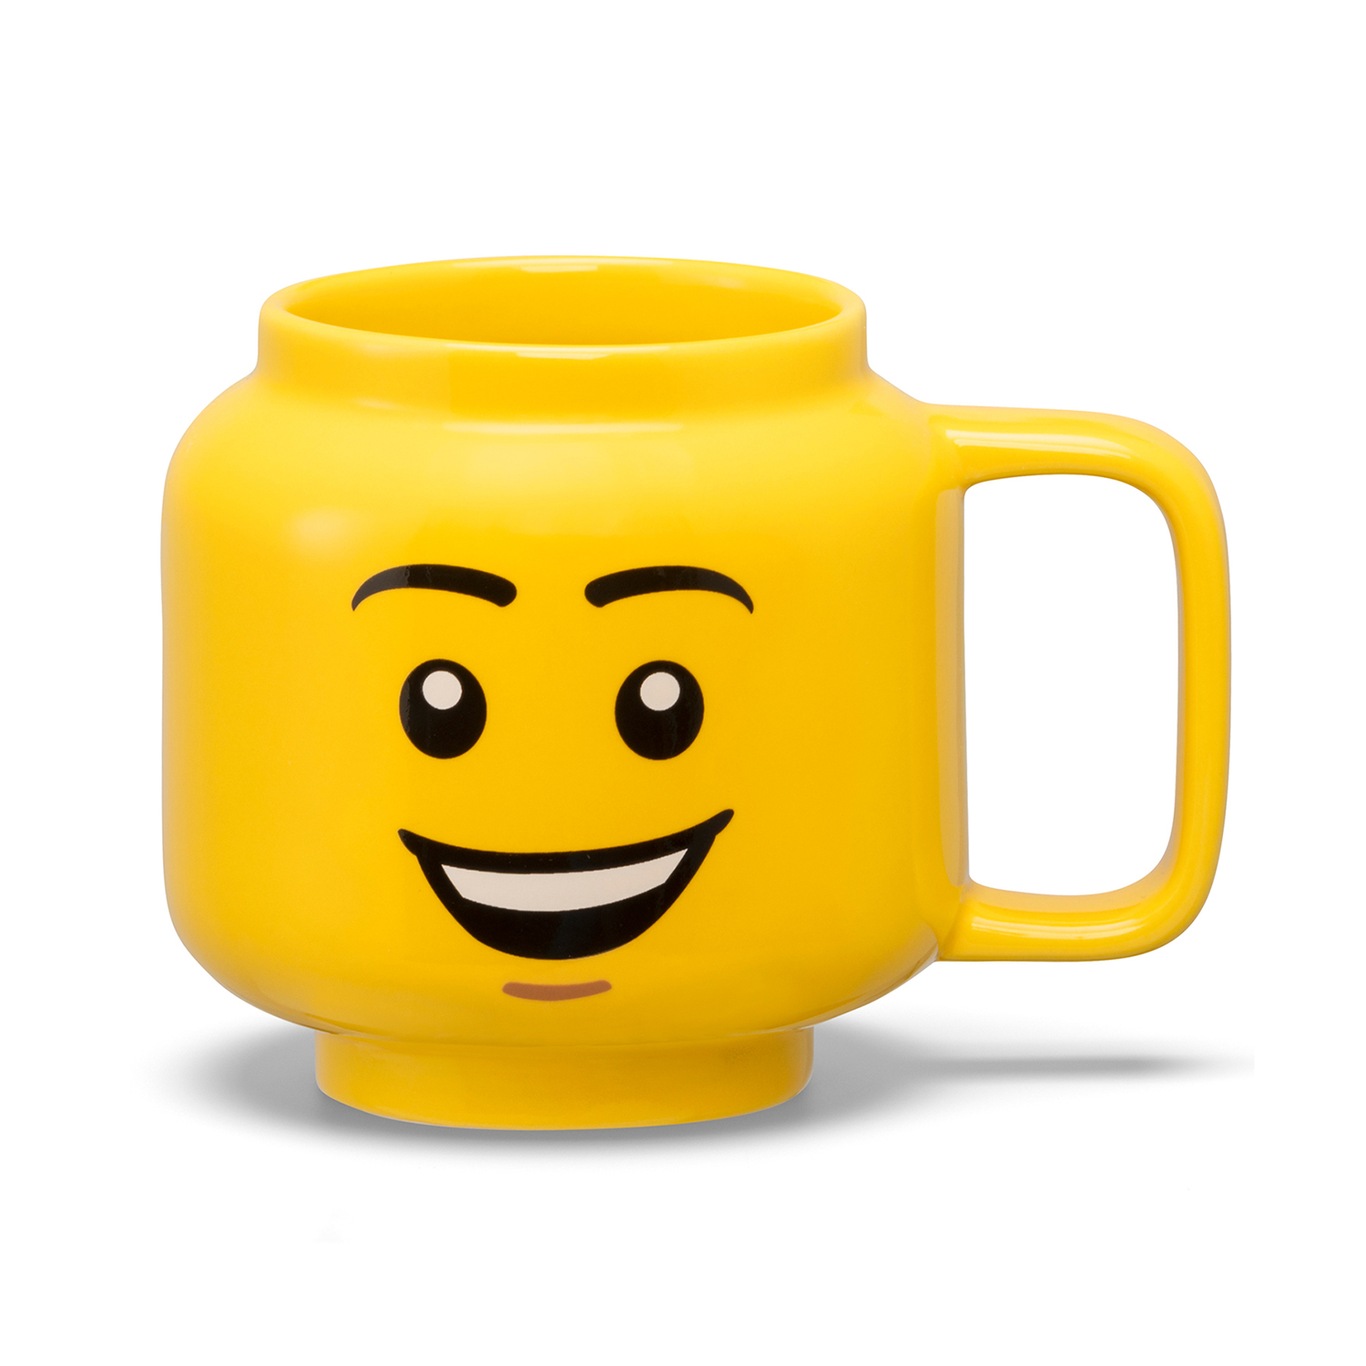 LEGO Ceramic Mug Small Boy Muki Keltainen, S